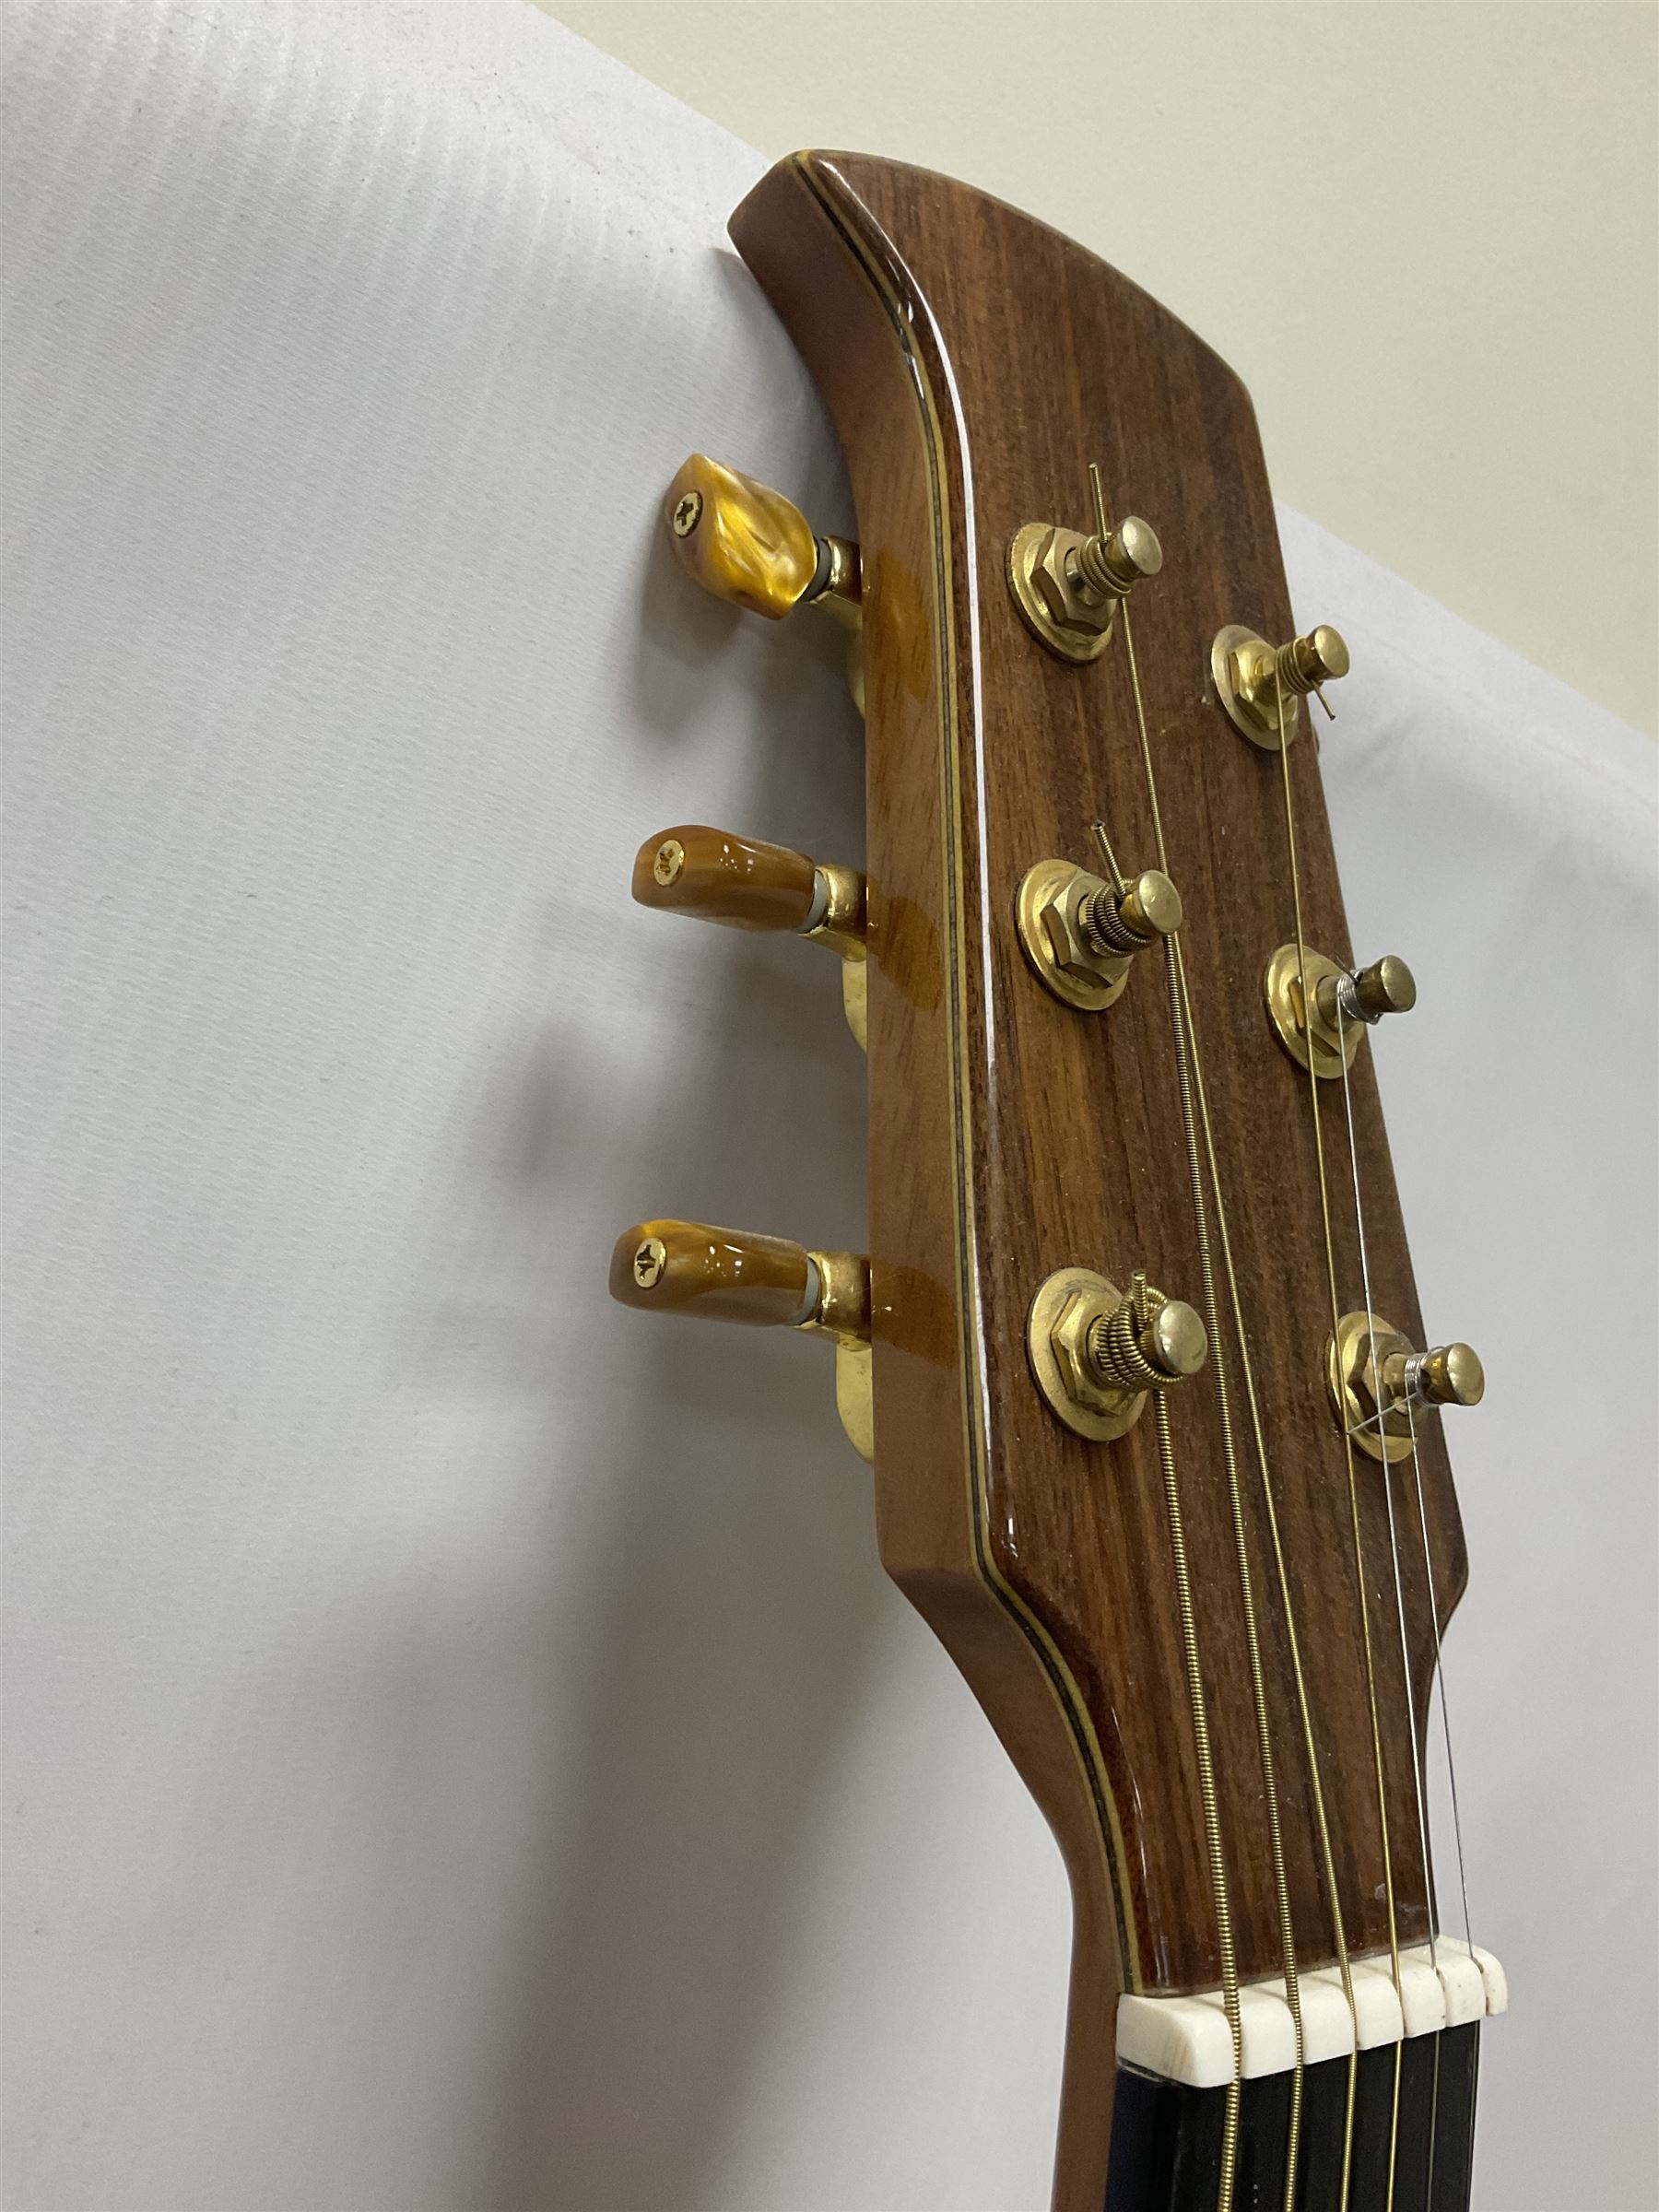 Brazilian Giannini Craviola six string acoustic guitar - Image 14 of 21